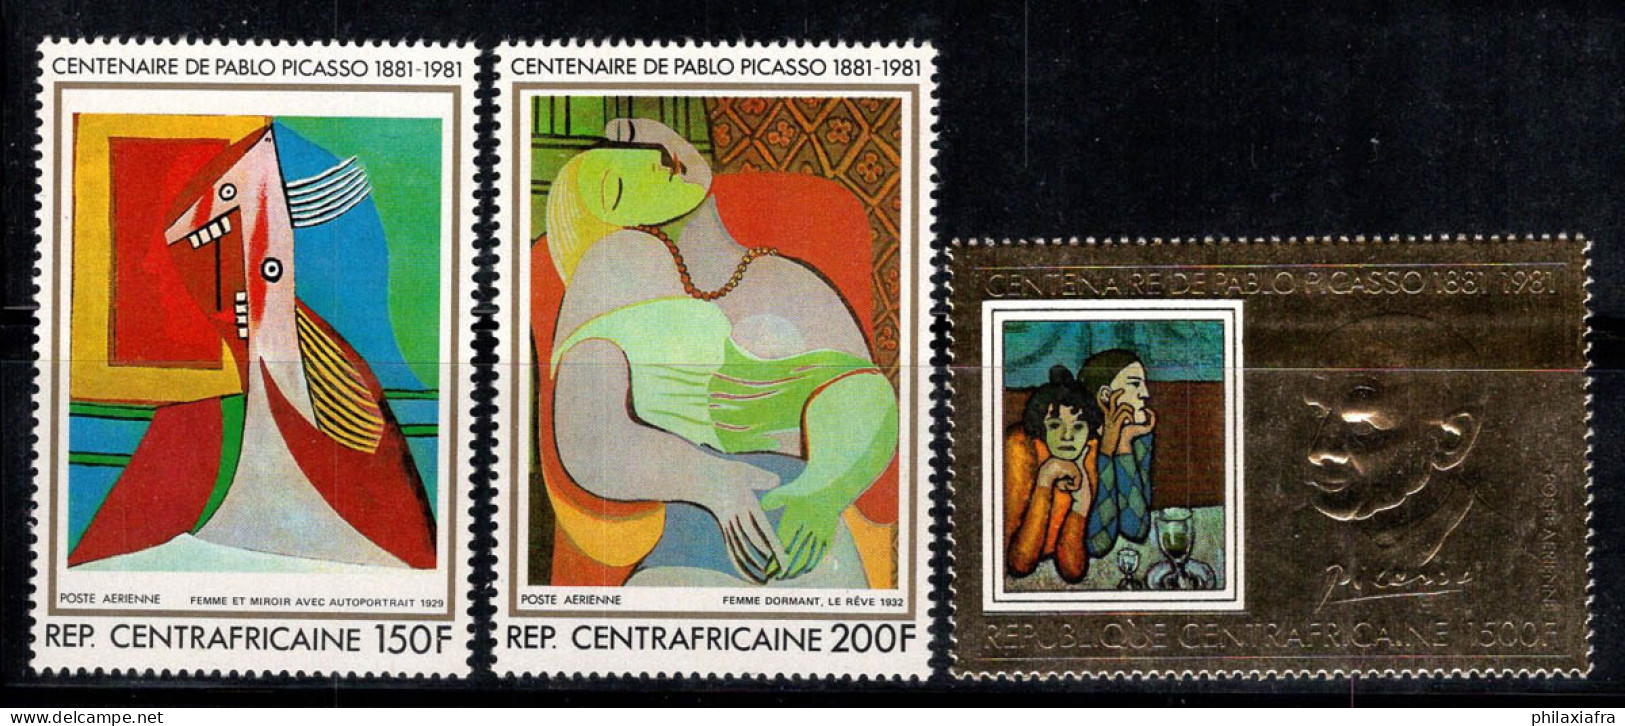 République Centrafricaine 1981 Mi. 745, 748 Neuf ** 100% Poste Aérienne Picasso - República Centroafricana